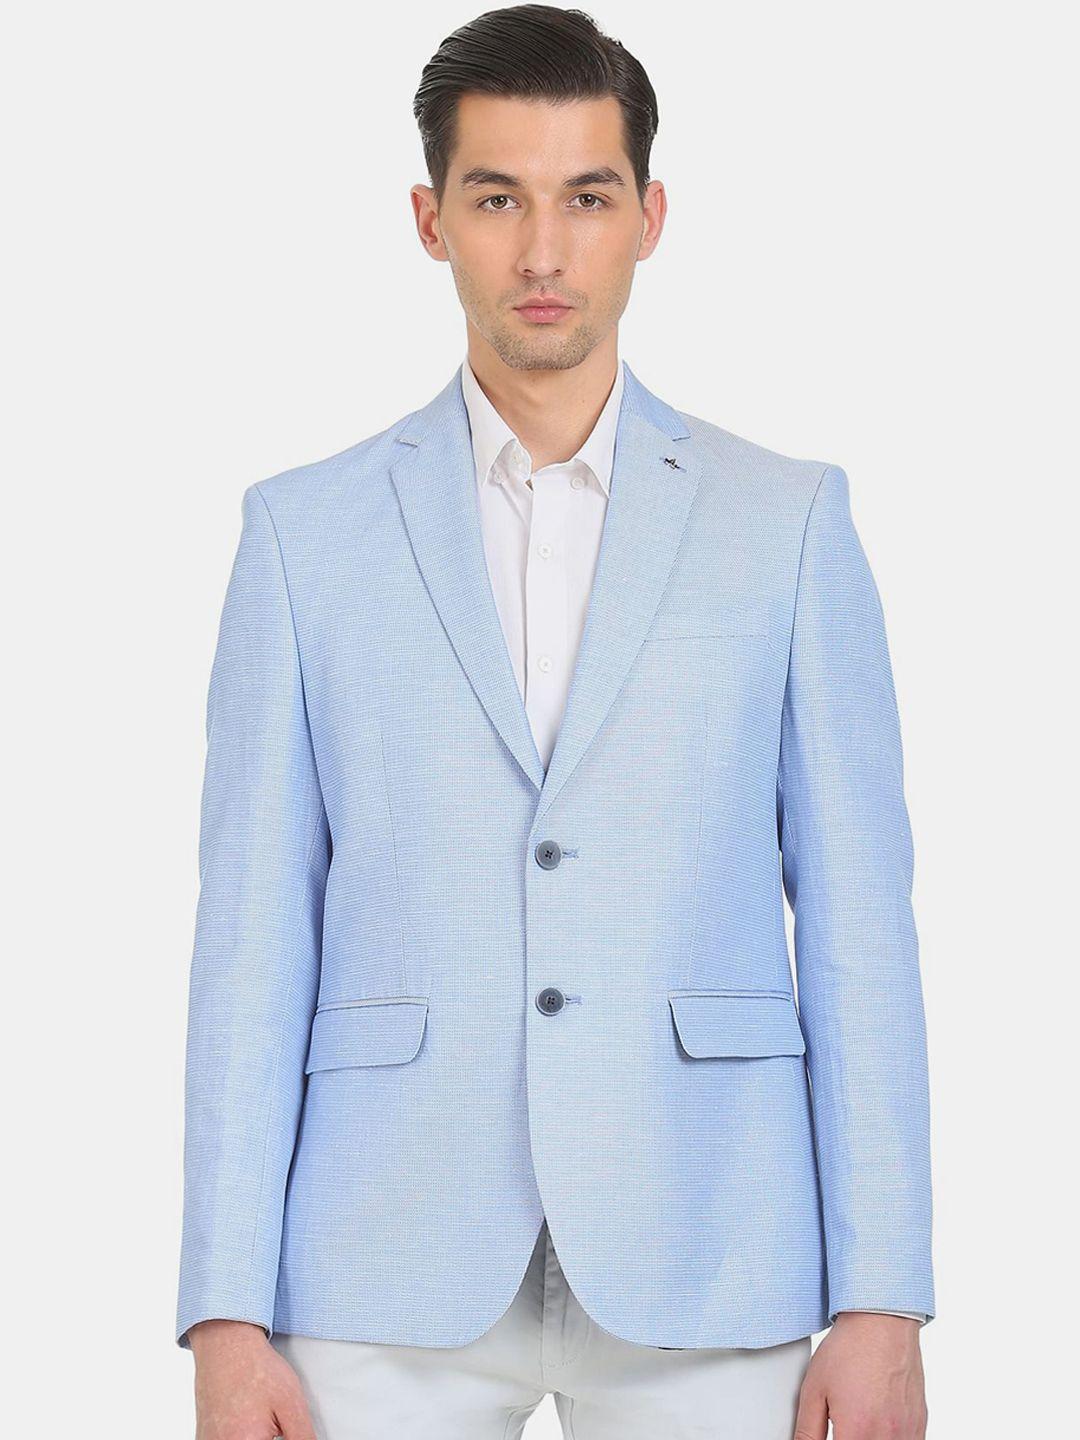 arrow men blue solid single-breasted formal blazer